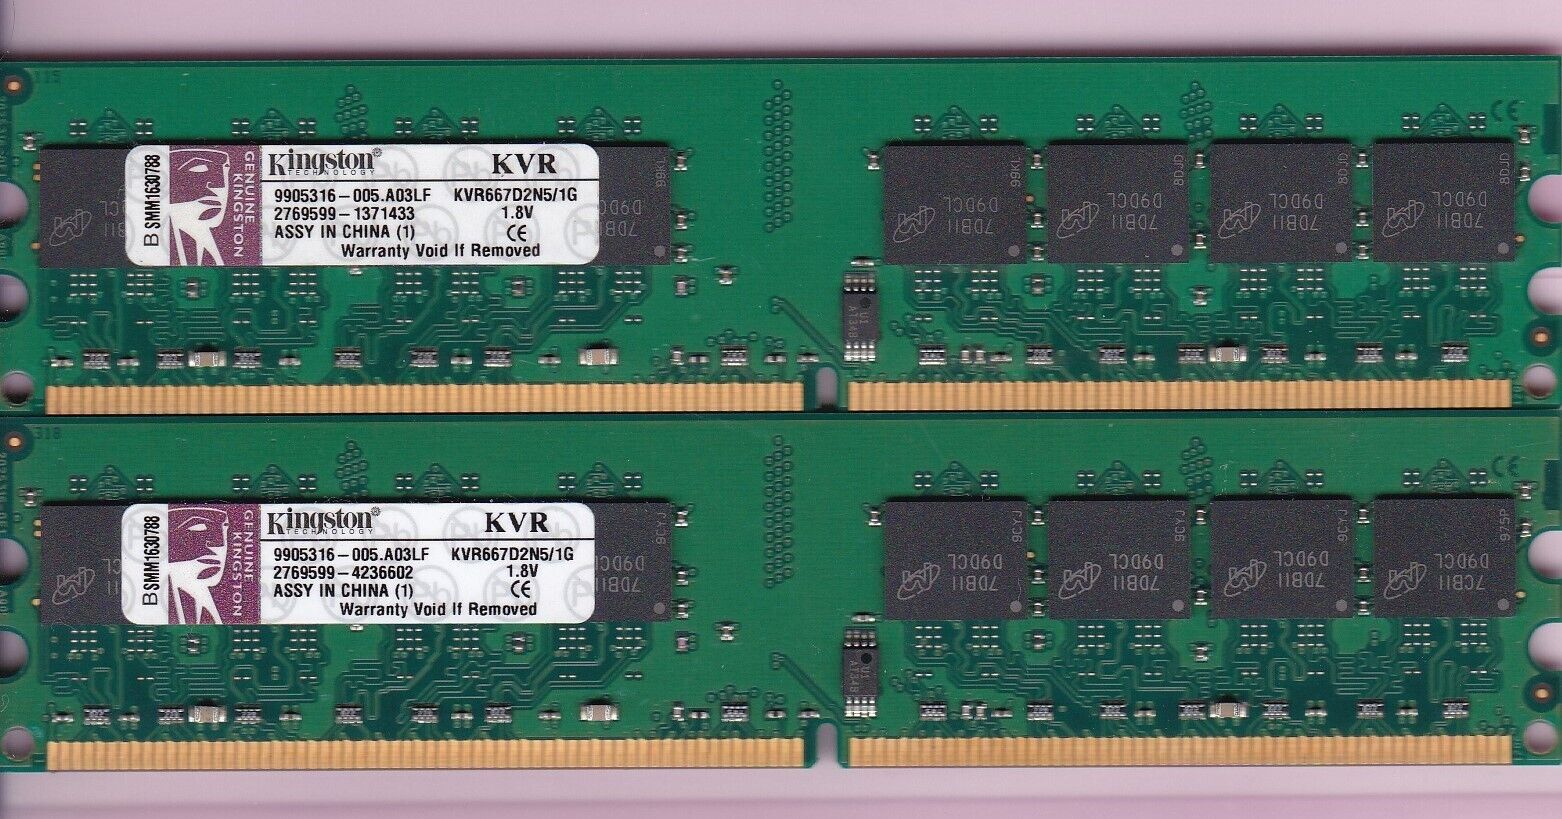 2GB 2x1GB PC2 5300 KINGSTON KVR667D2N5/1G MICRON DDR2-667 RAM MEMORY KIT 240Pin